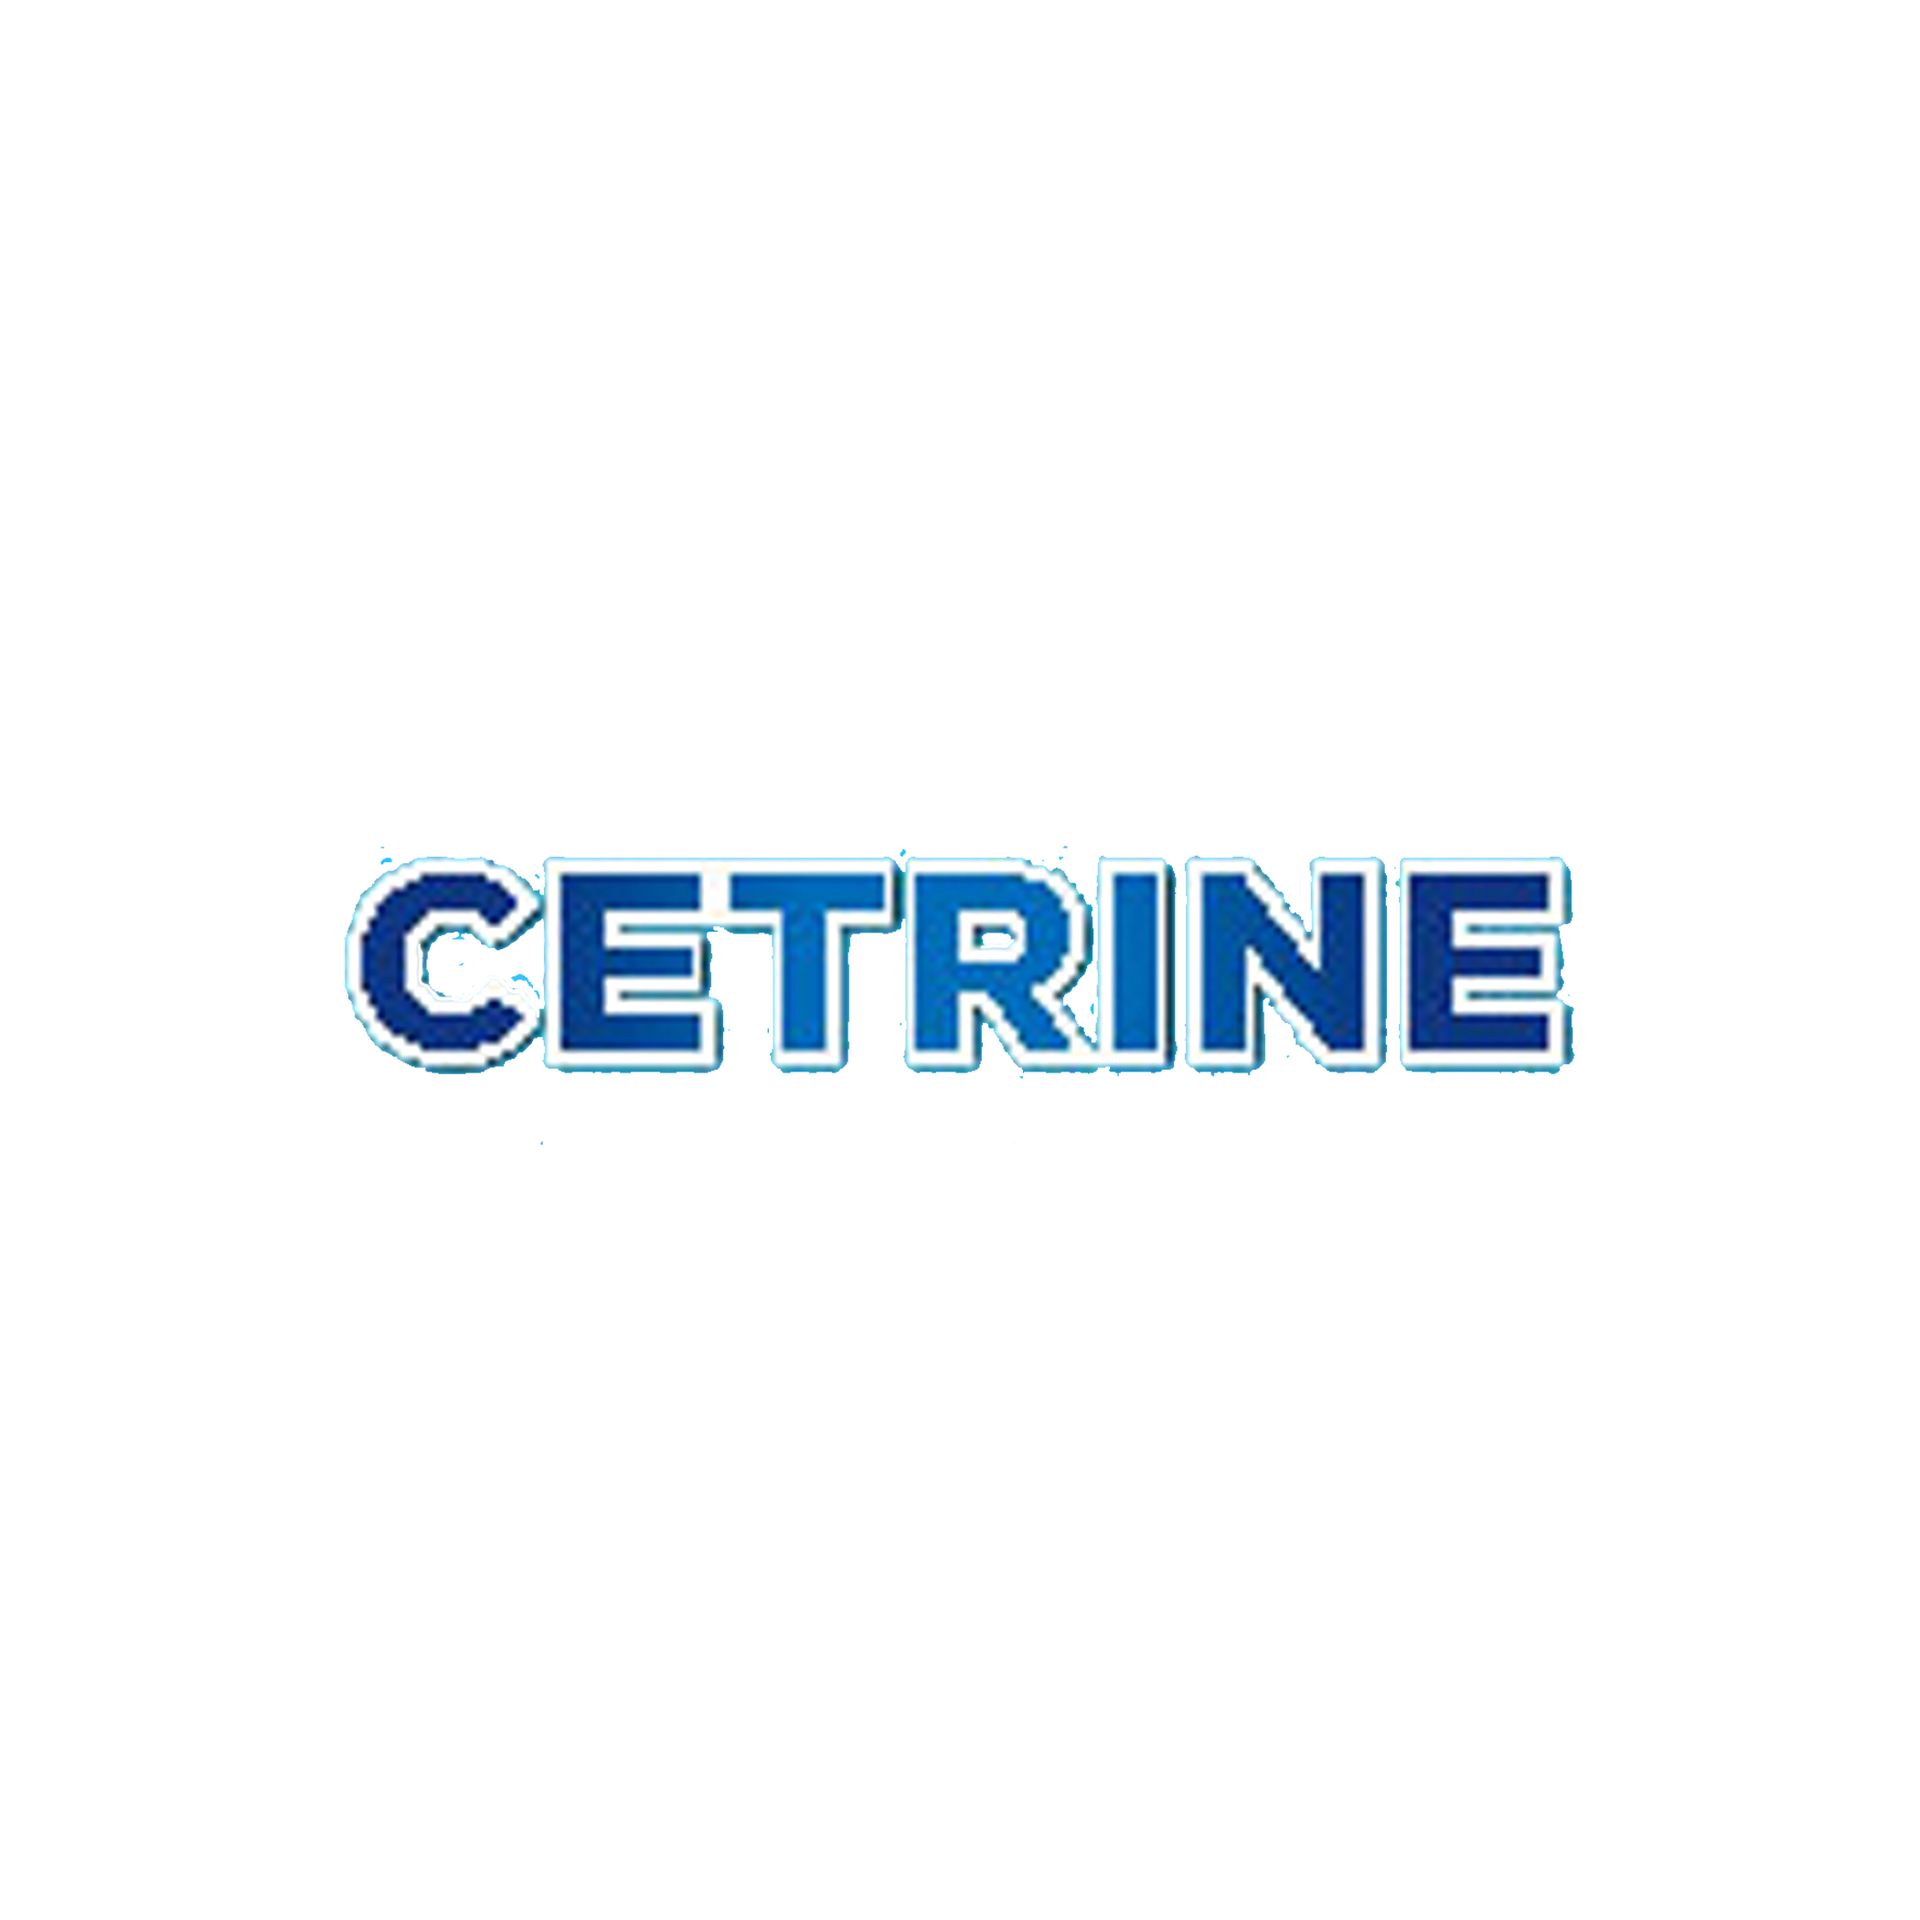 Product Brand: Cetrine